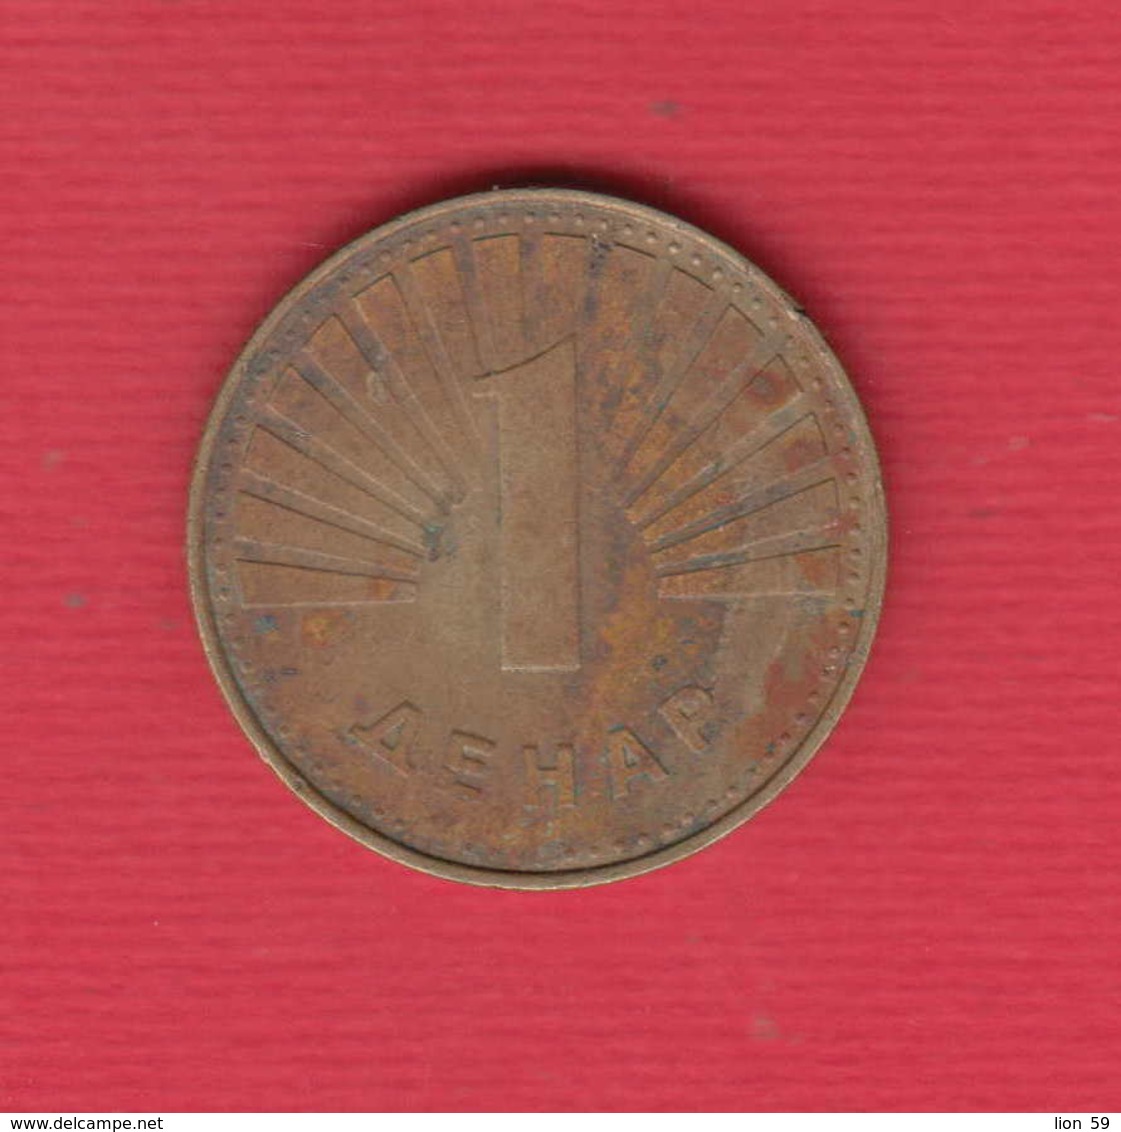 F7312  / - 1 Denar - 1993 -  Macedonia Macedoine Mazedonien - Coins Munzen Monnaies Monete - North Macedonia